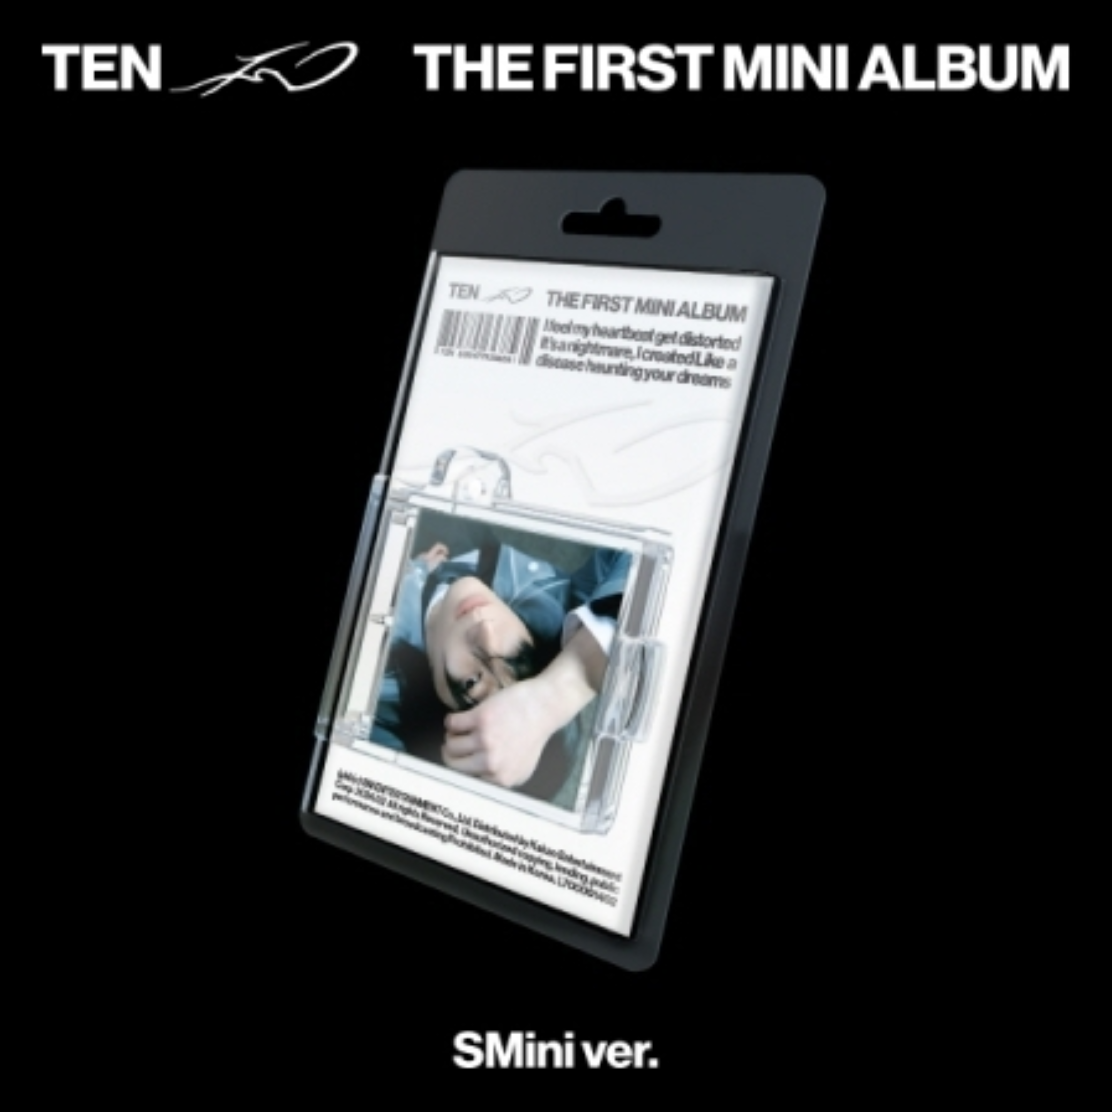 TEN - THE FIRST MINI ALBUM [TEN] (SMINI VER.)